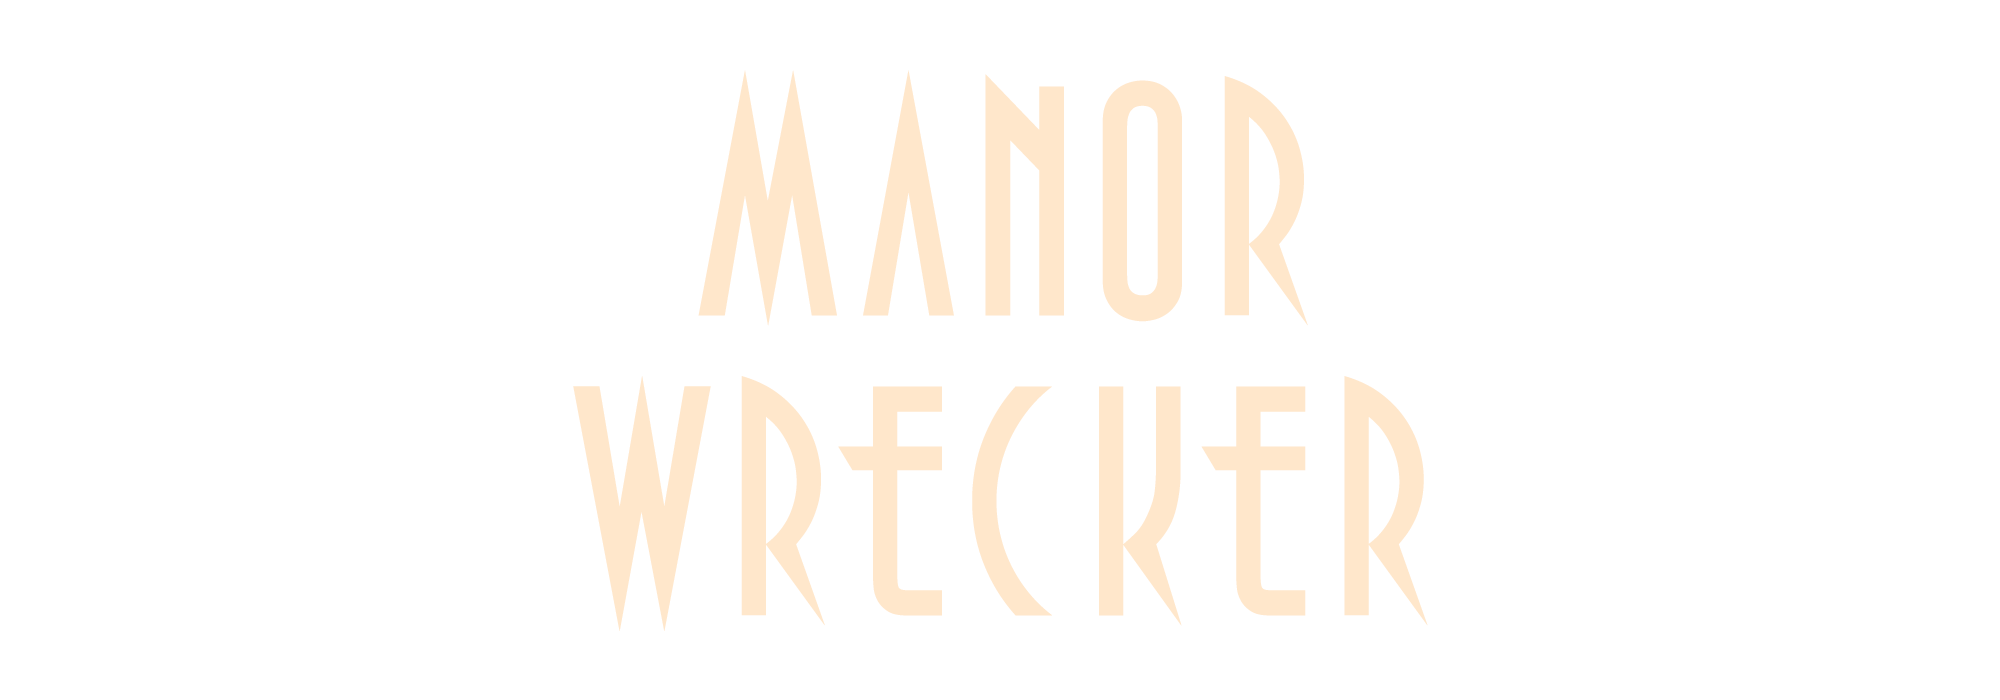 Manor Wrecker